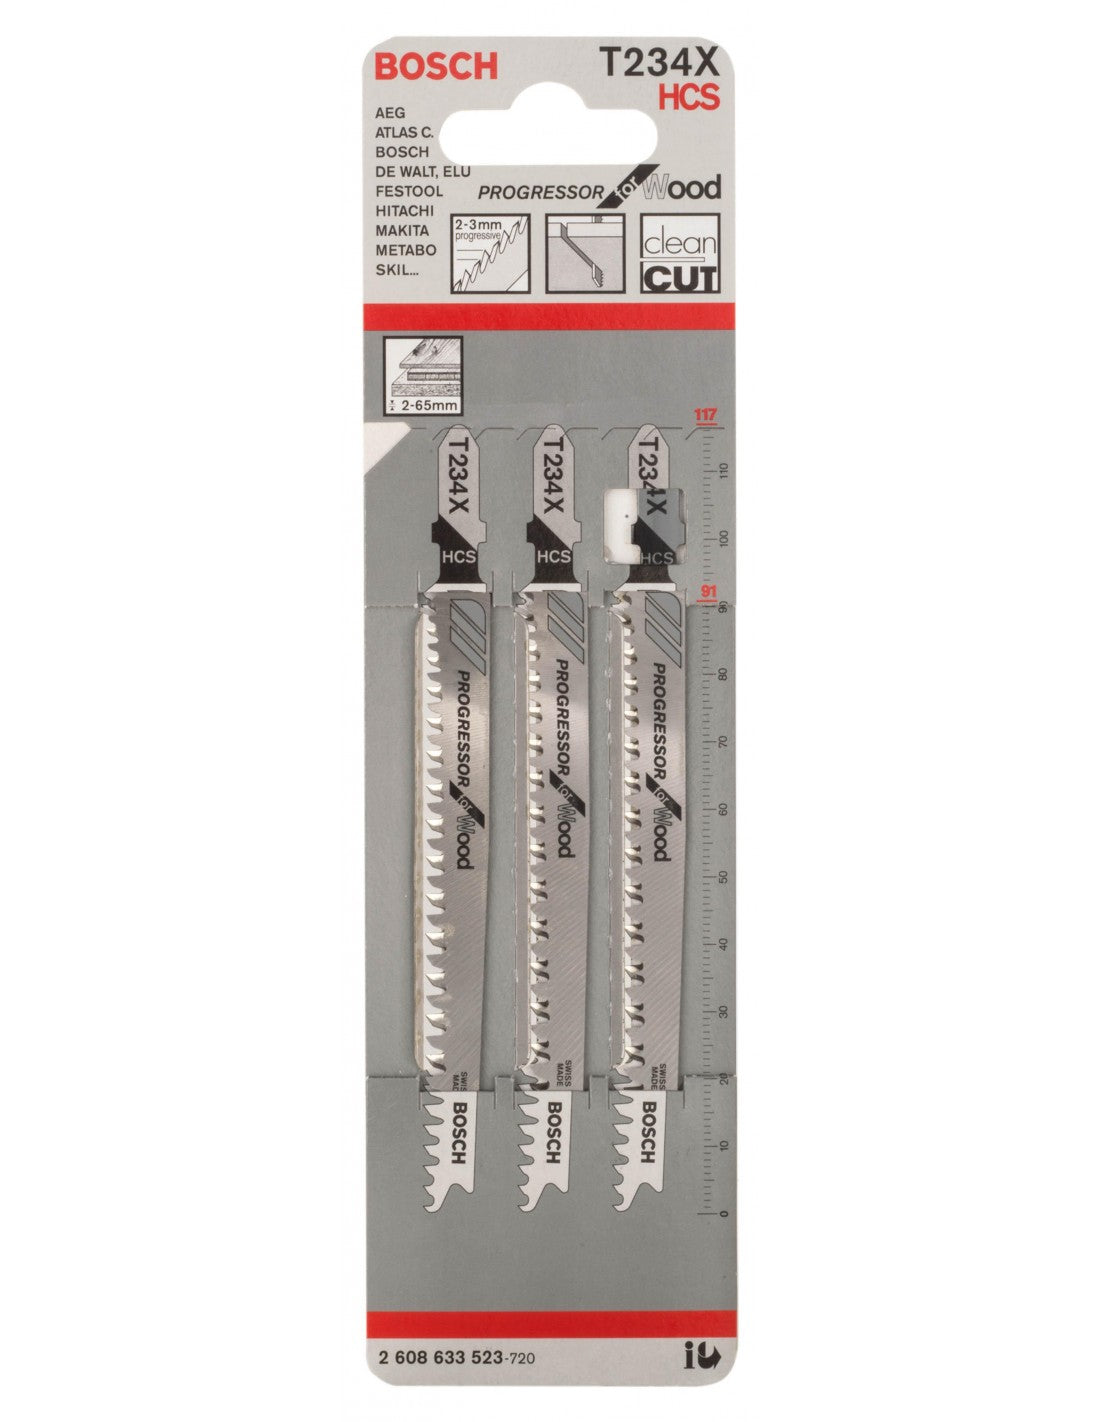 Bosch Jigsaw Blades T234X HCS Progressor for Wood 3 Pack 2608633523 Power Tool Services